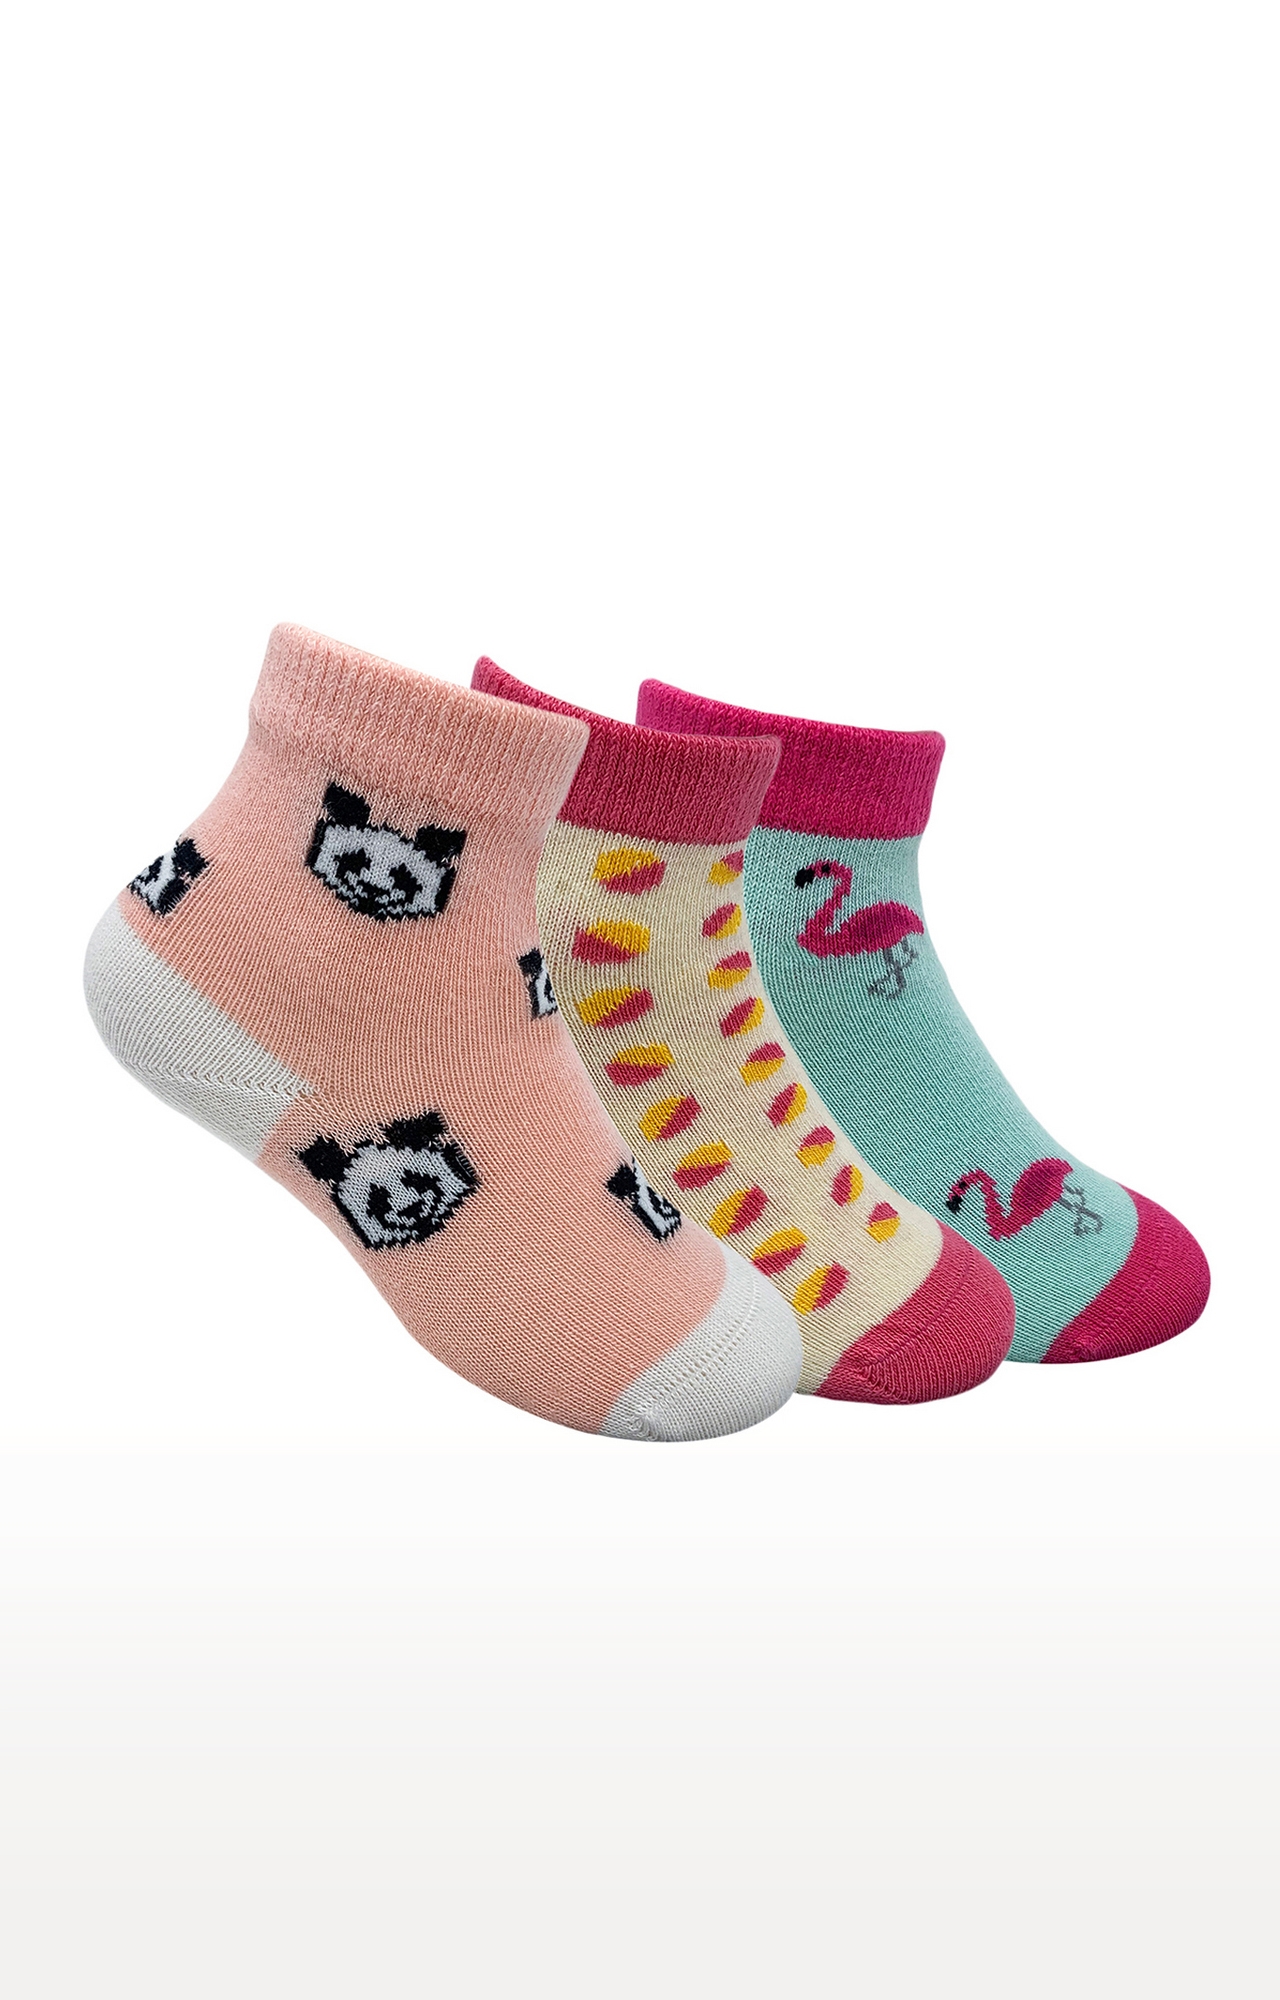 Mint & Oak | Mint & Oak Pink Delight Cotton Multi Ankle Length Socks for Kids - Pack of 3 0